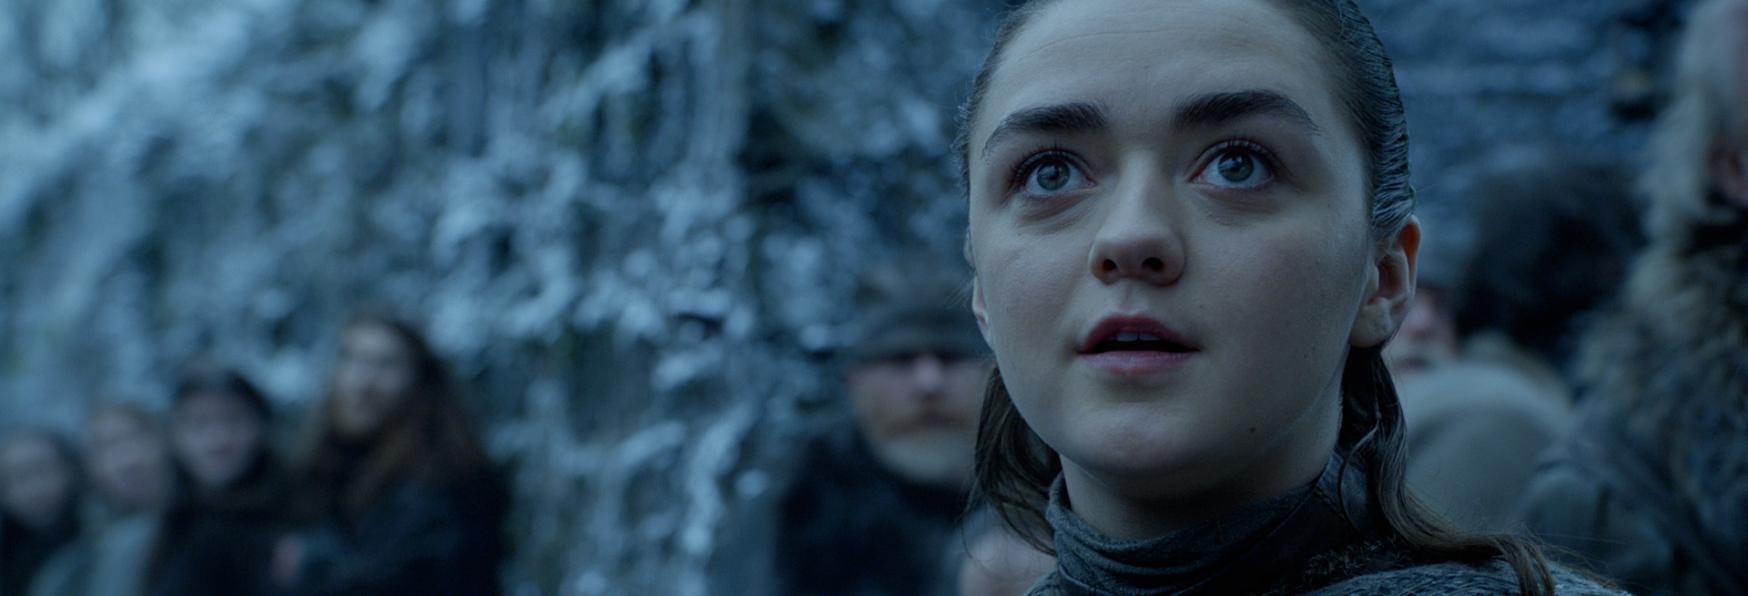 Game of Thrones: Maisie Williams rimase Sorpresa della Scena di Sesso di Arya, "Pensavo fosse Queer"